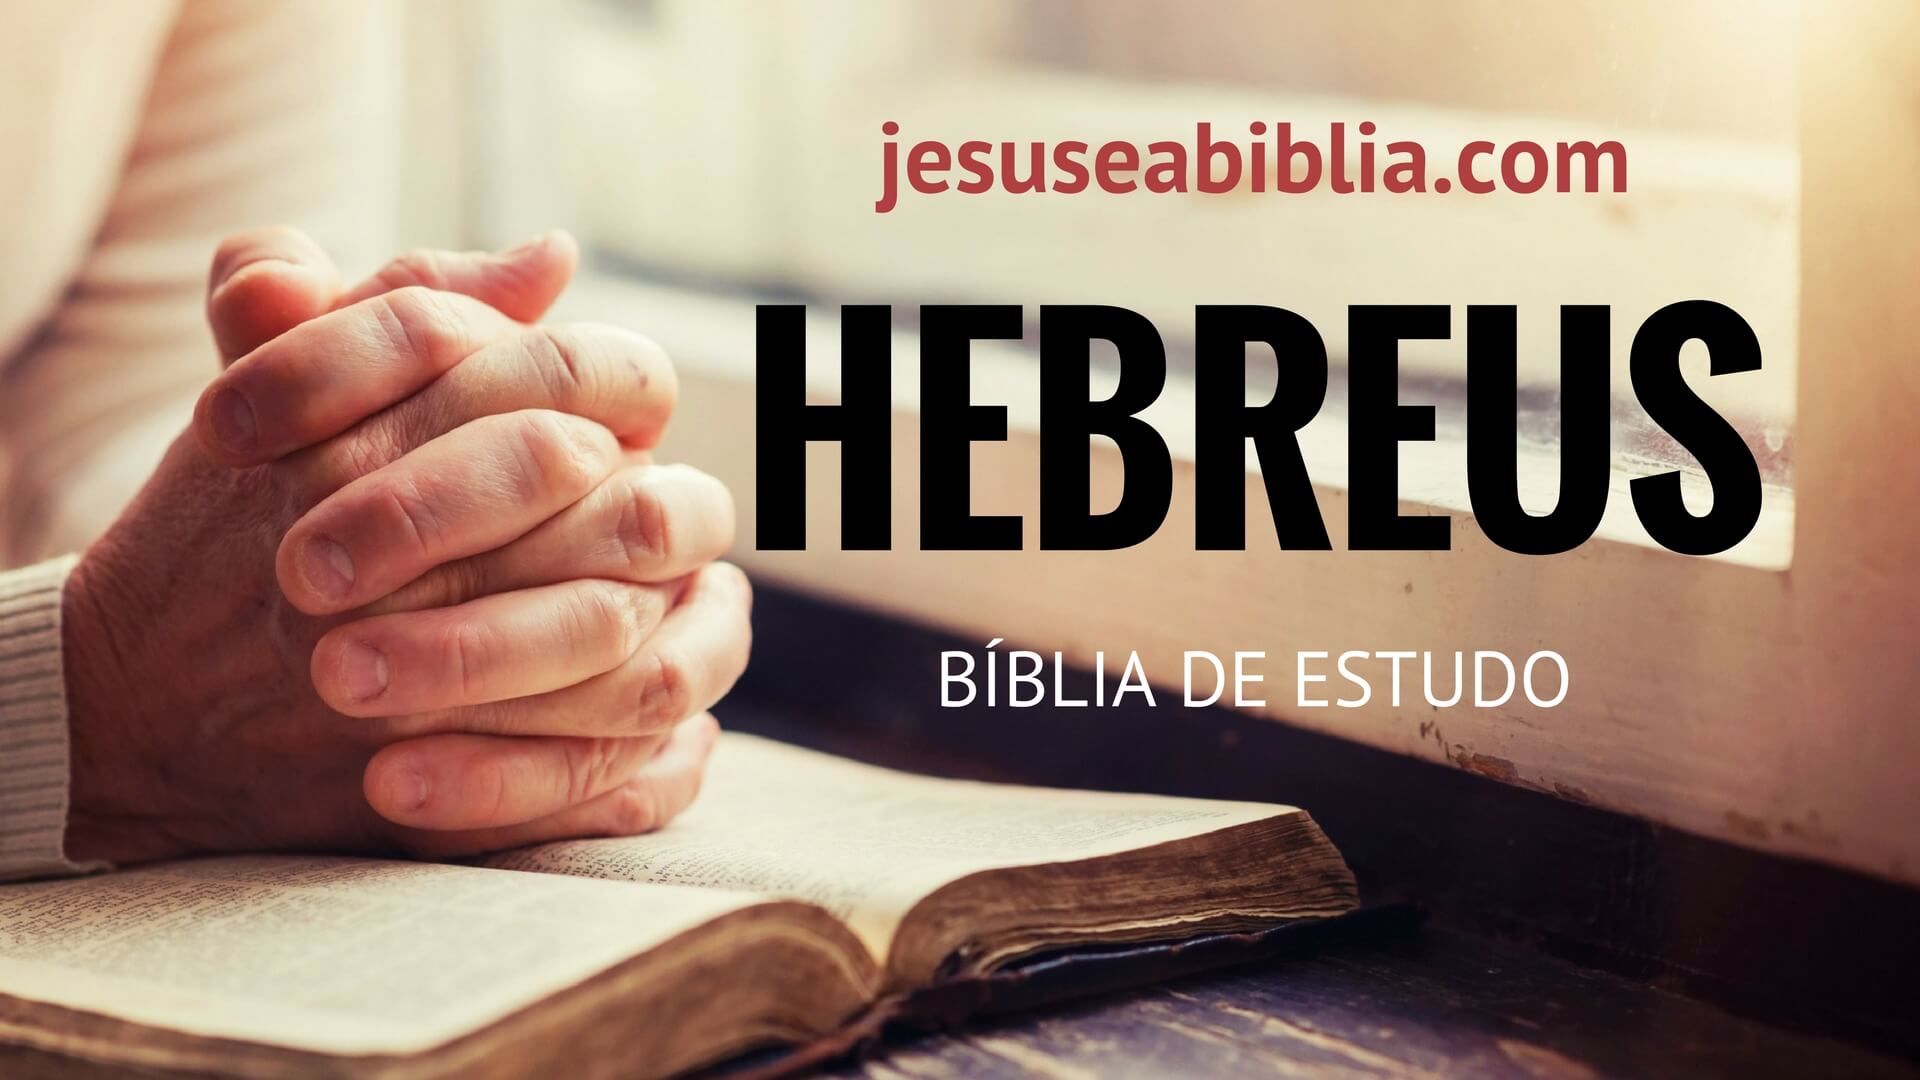 Hebreus 8:1-13 - Bíblia